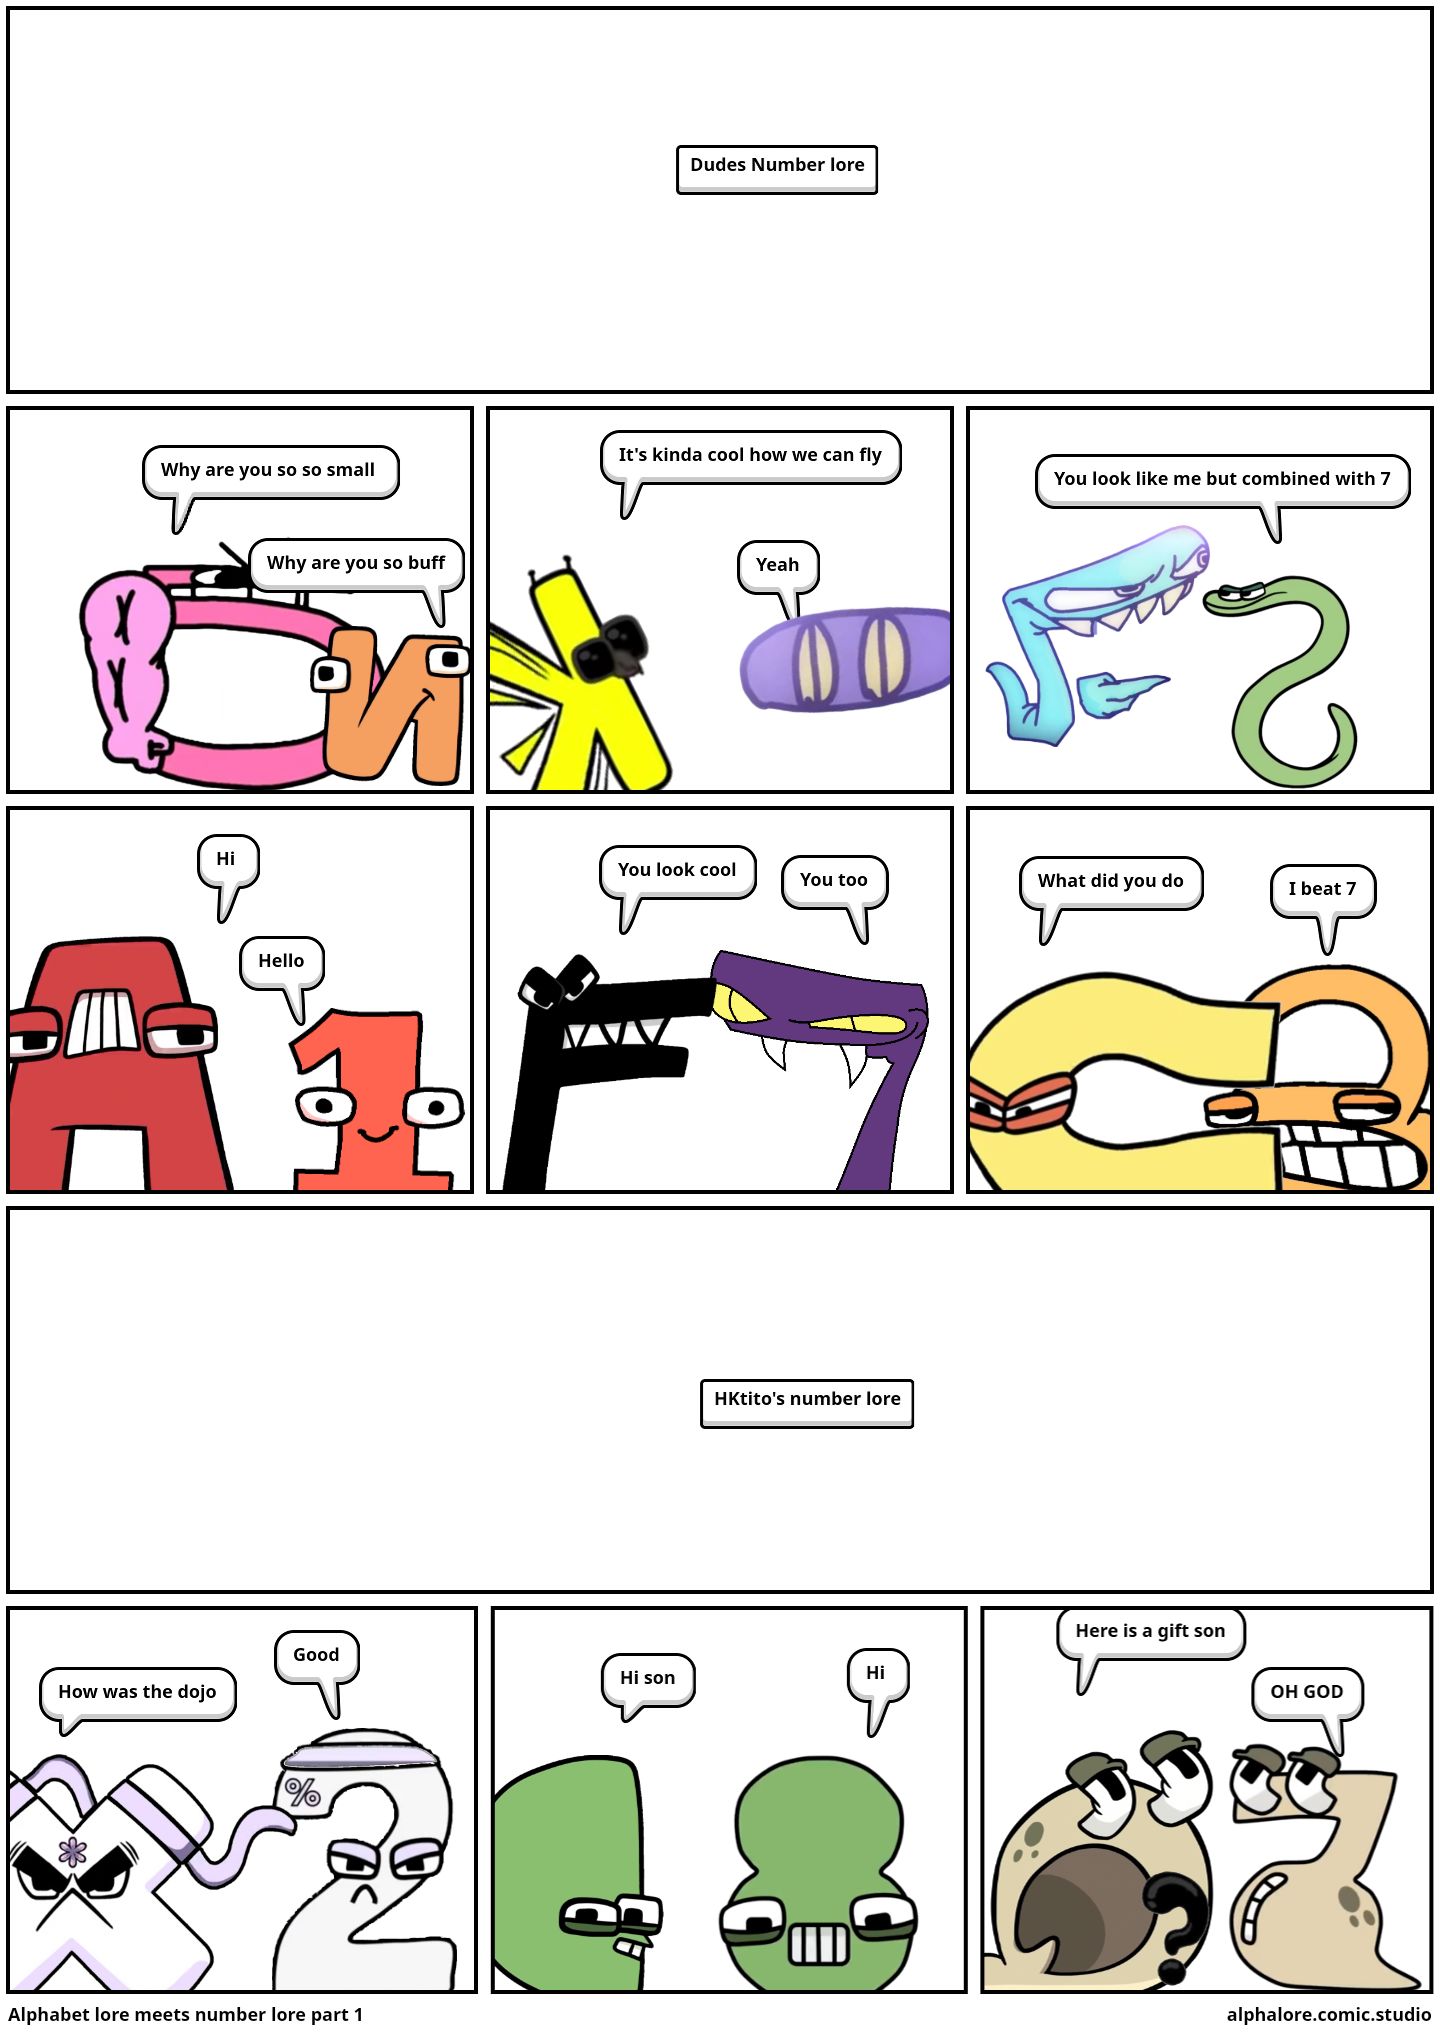 Meeting alphabet lore part 2 - Comic Studio